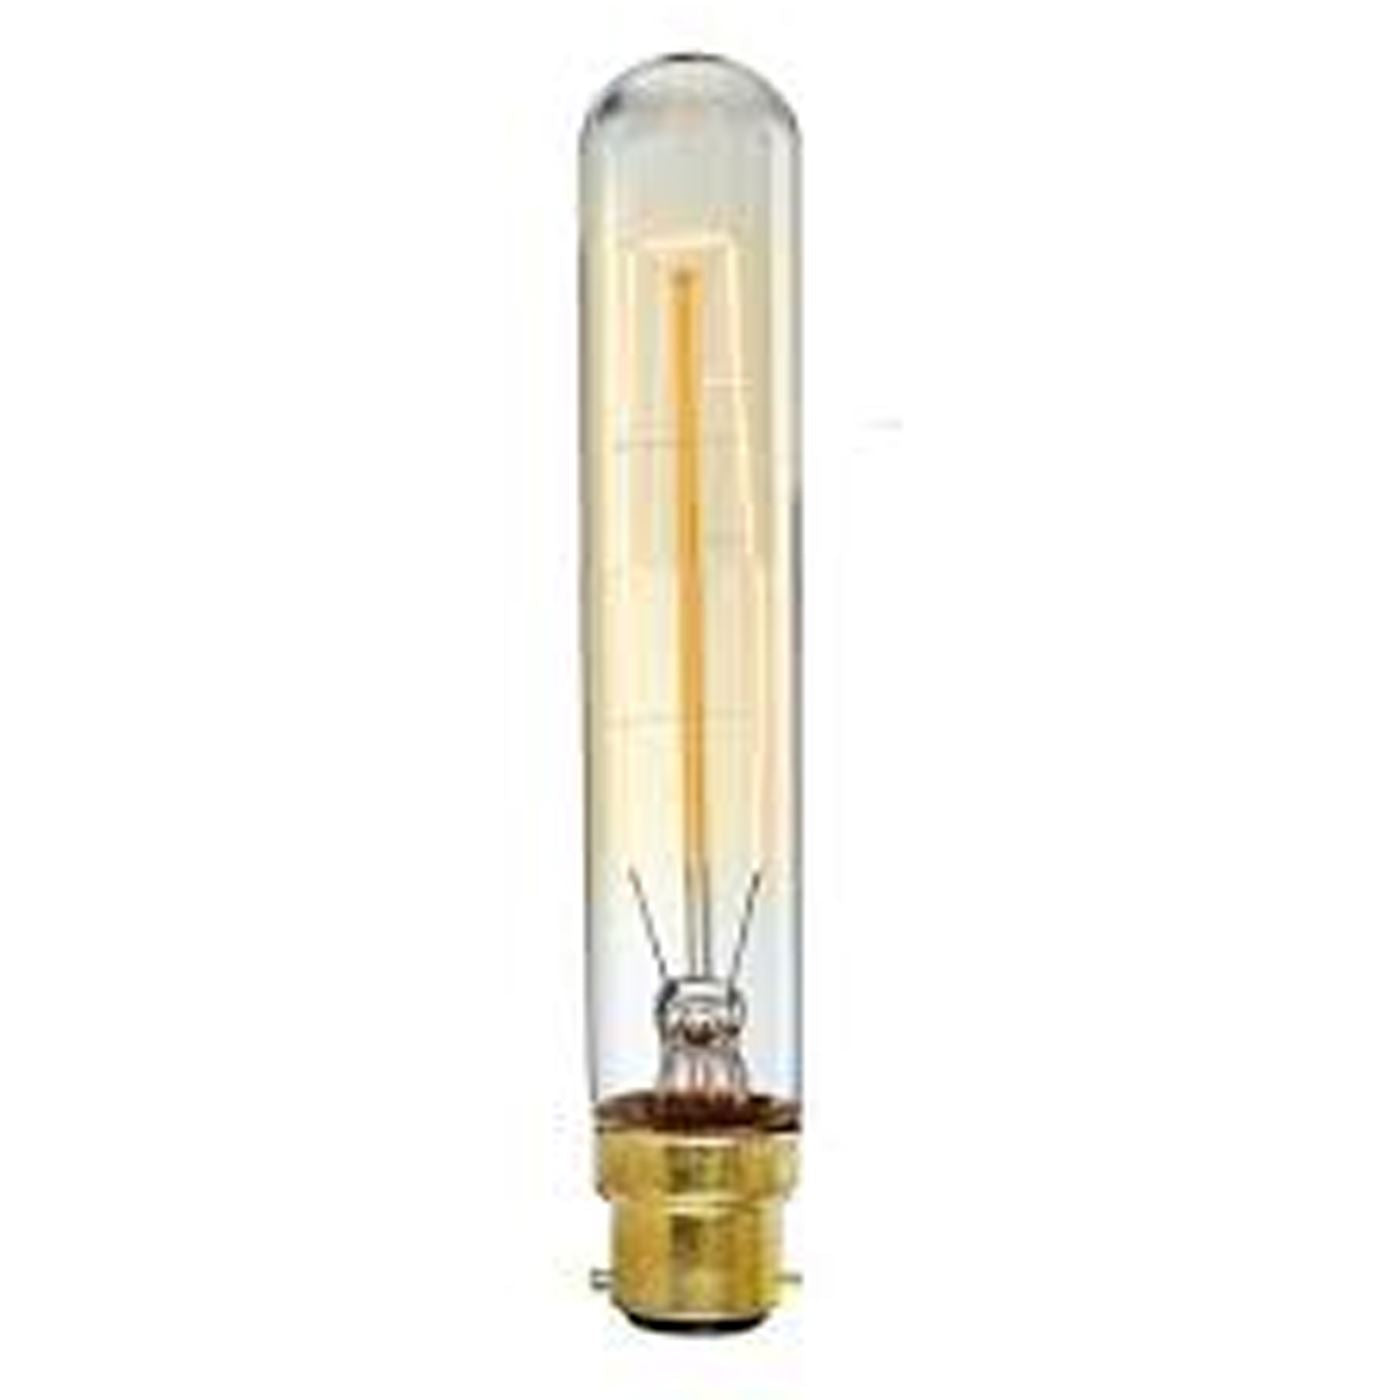 Vintage Filament Glühlampe Edison Tall Bulb Dimmbar B22 E27 Dekoratives Industrielicht ~